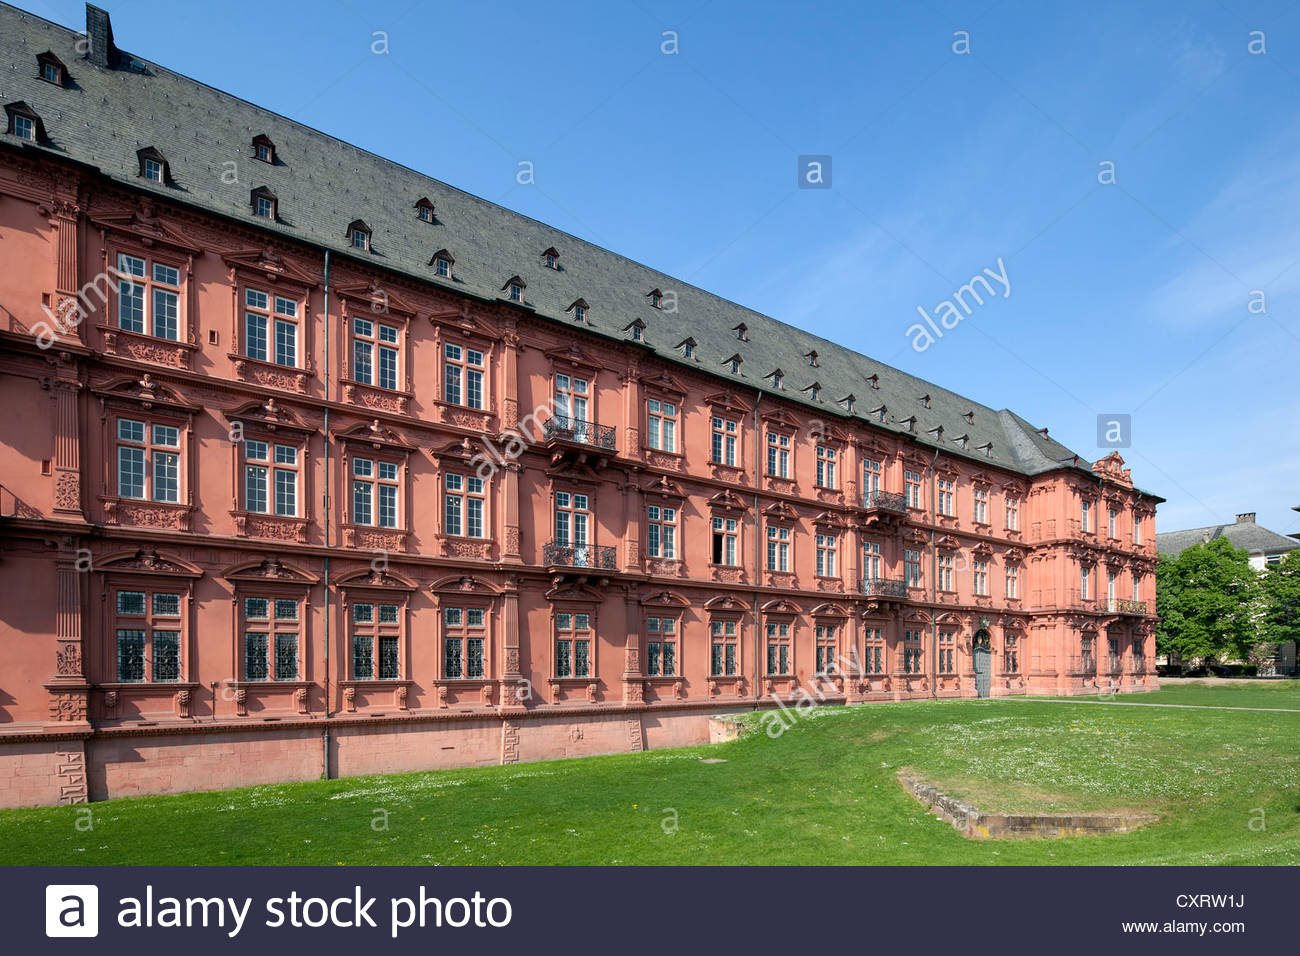 Electoral Palace, Mainz #1